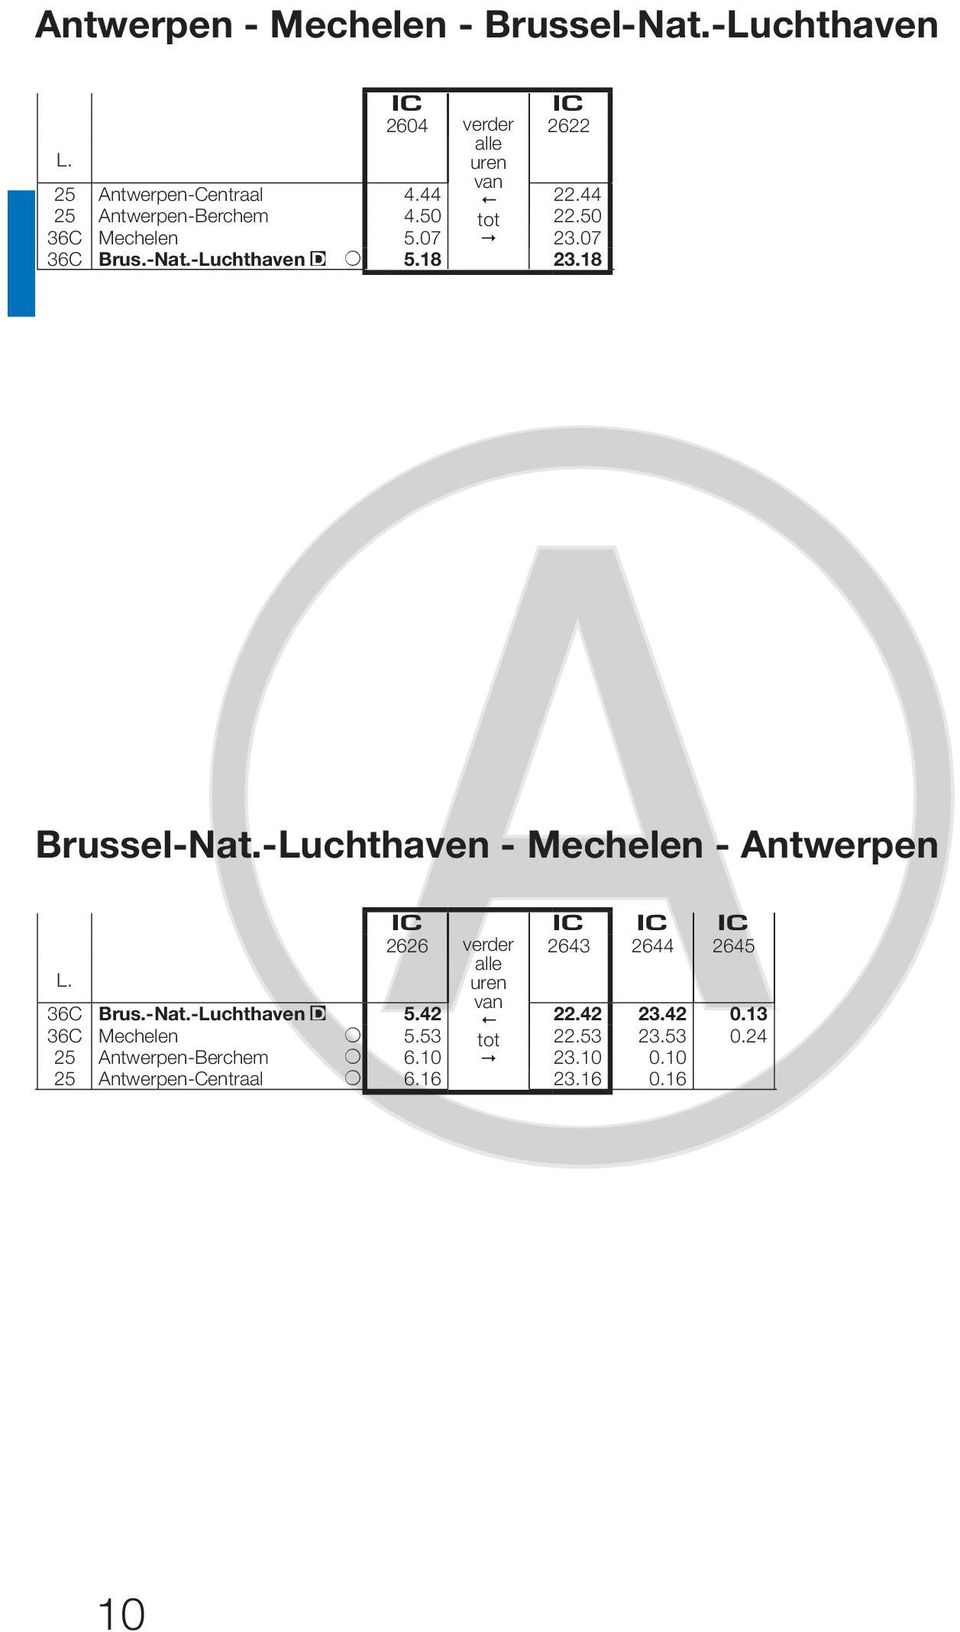 18 3 Brussel-Nat.-Luchthaven - Mechelen - Antwerpen 2626 alle 2643 2644 2645 36C 36C 25 Brus.-Nat.-Luchthaven Mechelen Antwerpen-Berchem + + 5.